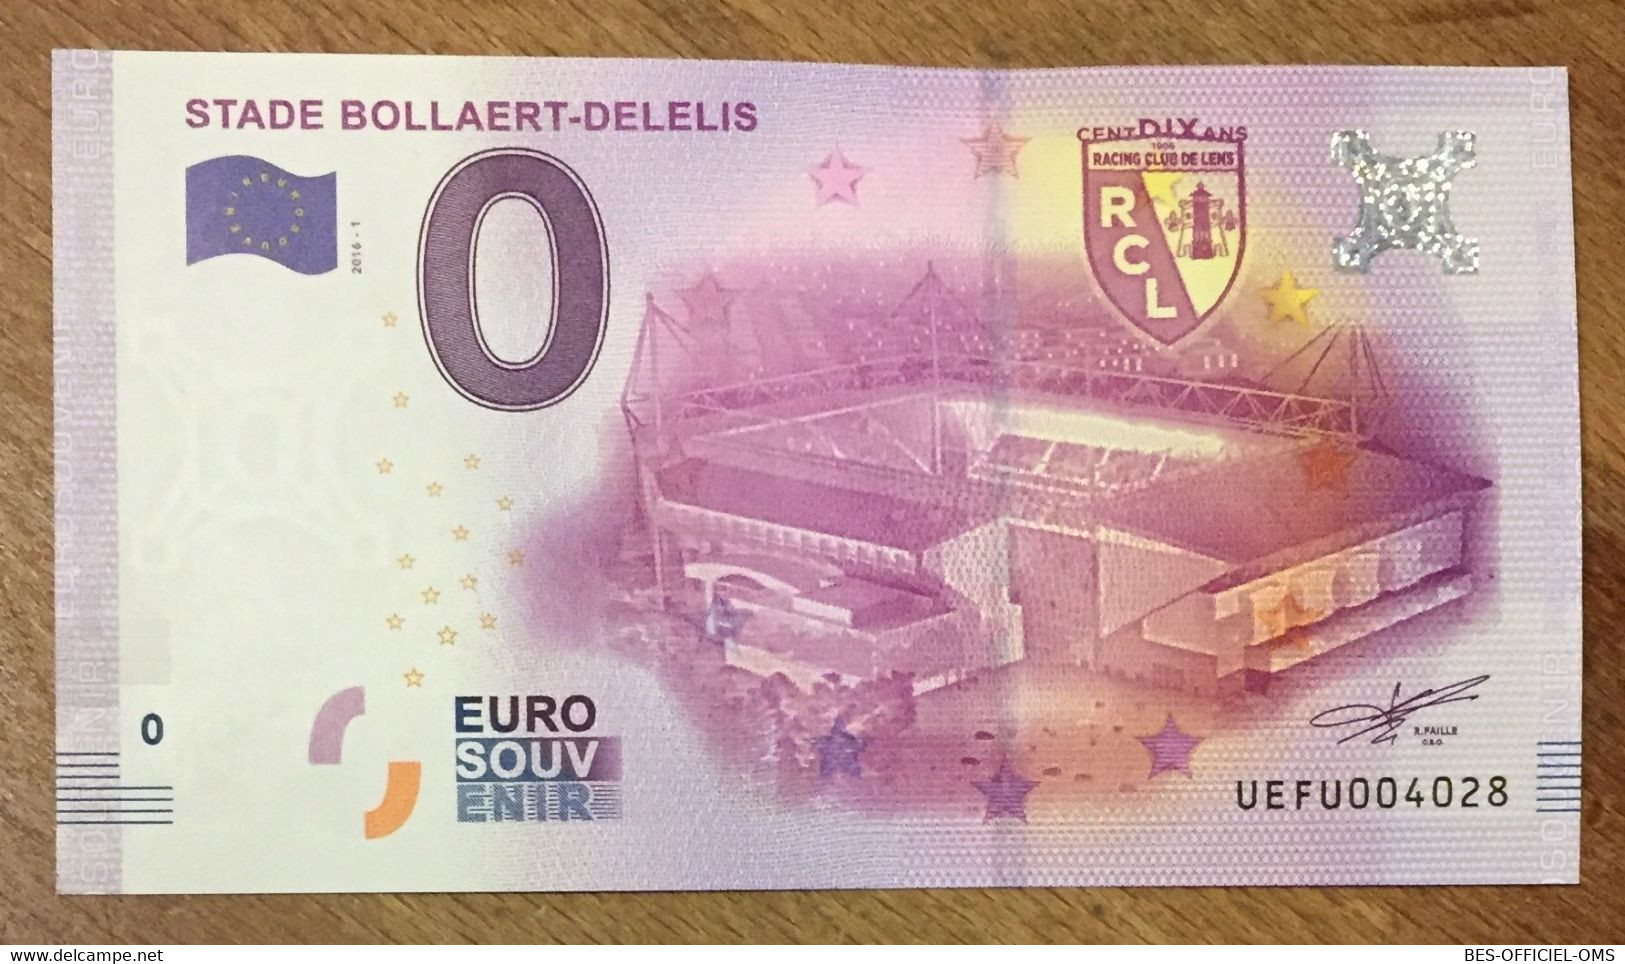 2016 BILLET 0 EURO SOUVENIR DPT 62 STADE BOLLAERT-DELELIS RCL ZERO 0 EURO SCHEIN BANKNOTE PAPER MONEY - Essais Privés / Non-officiels